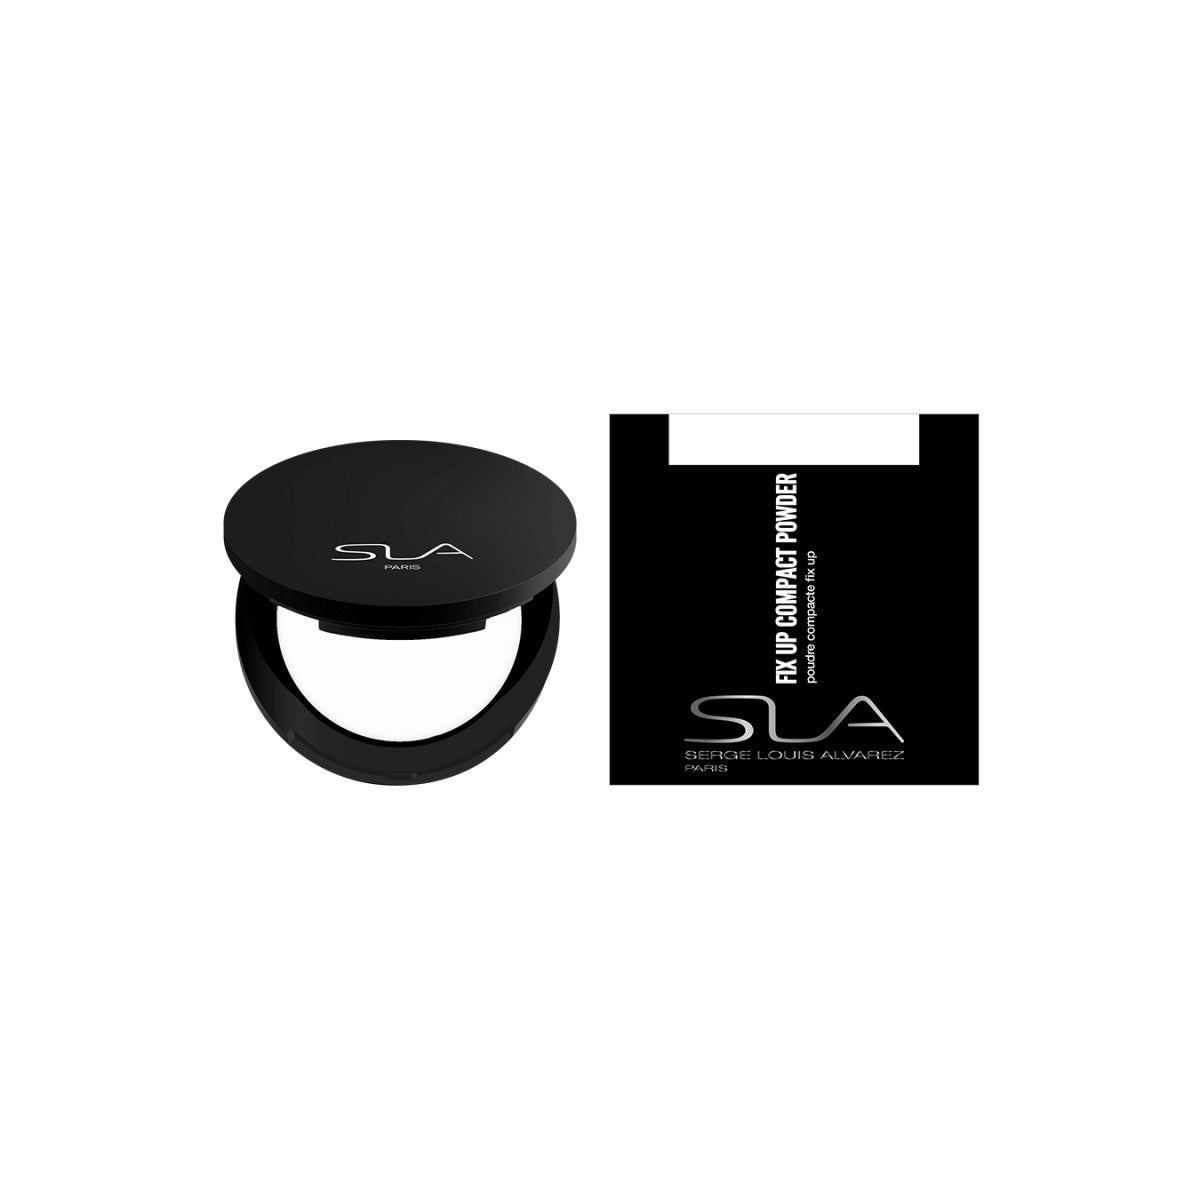 SLA Paris Fix Up Compact Powder (4.5g) packaging